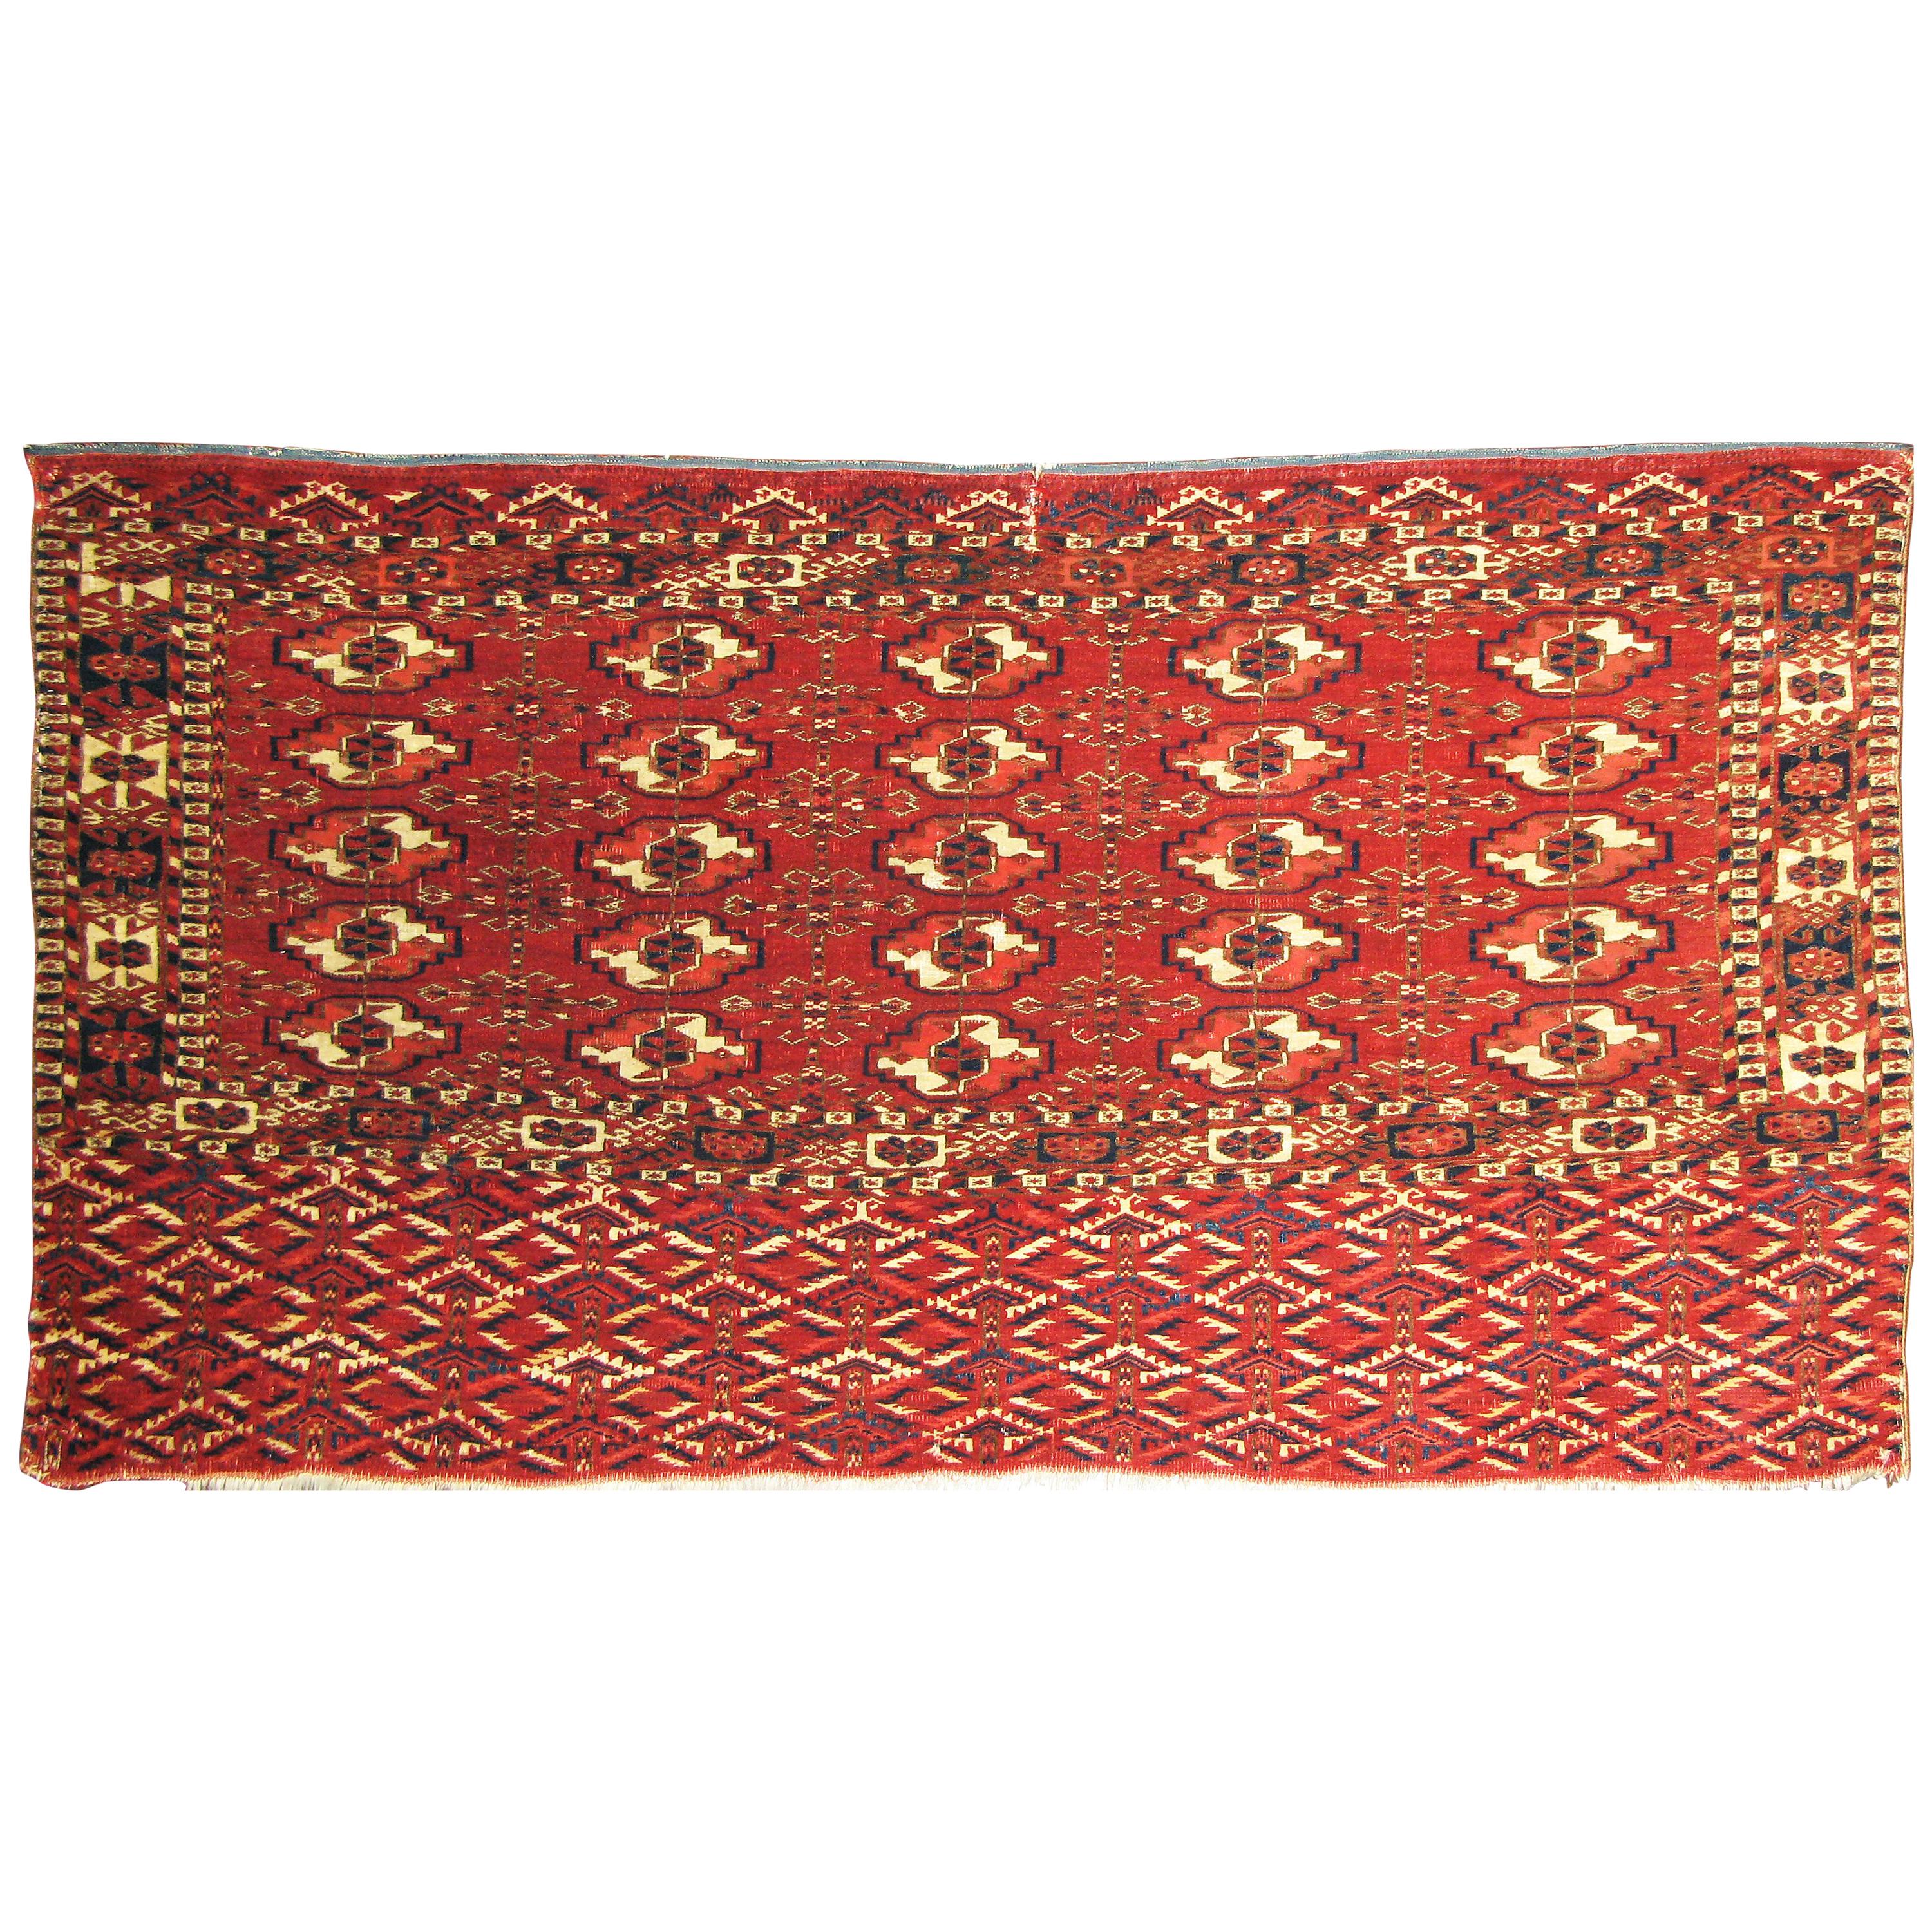 Very Fine Antique Tekke Turkomen Rug, circa1900